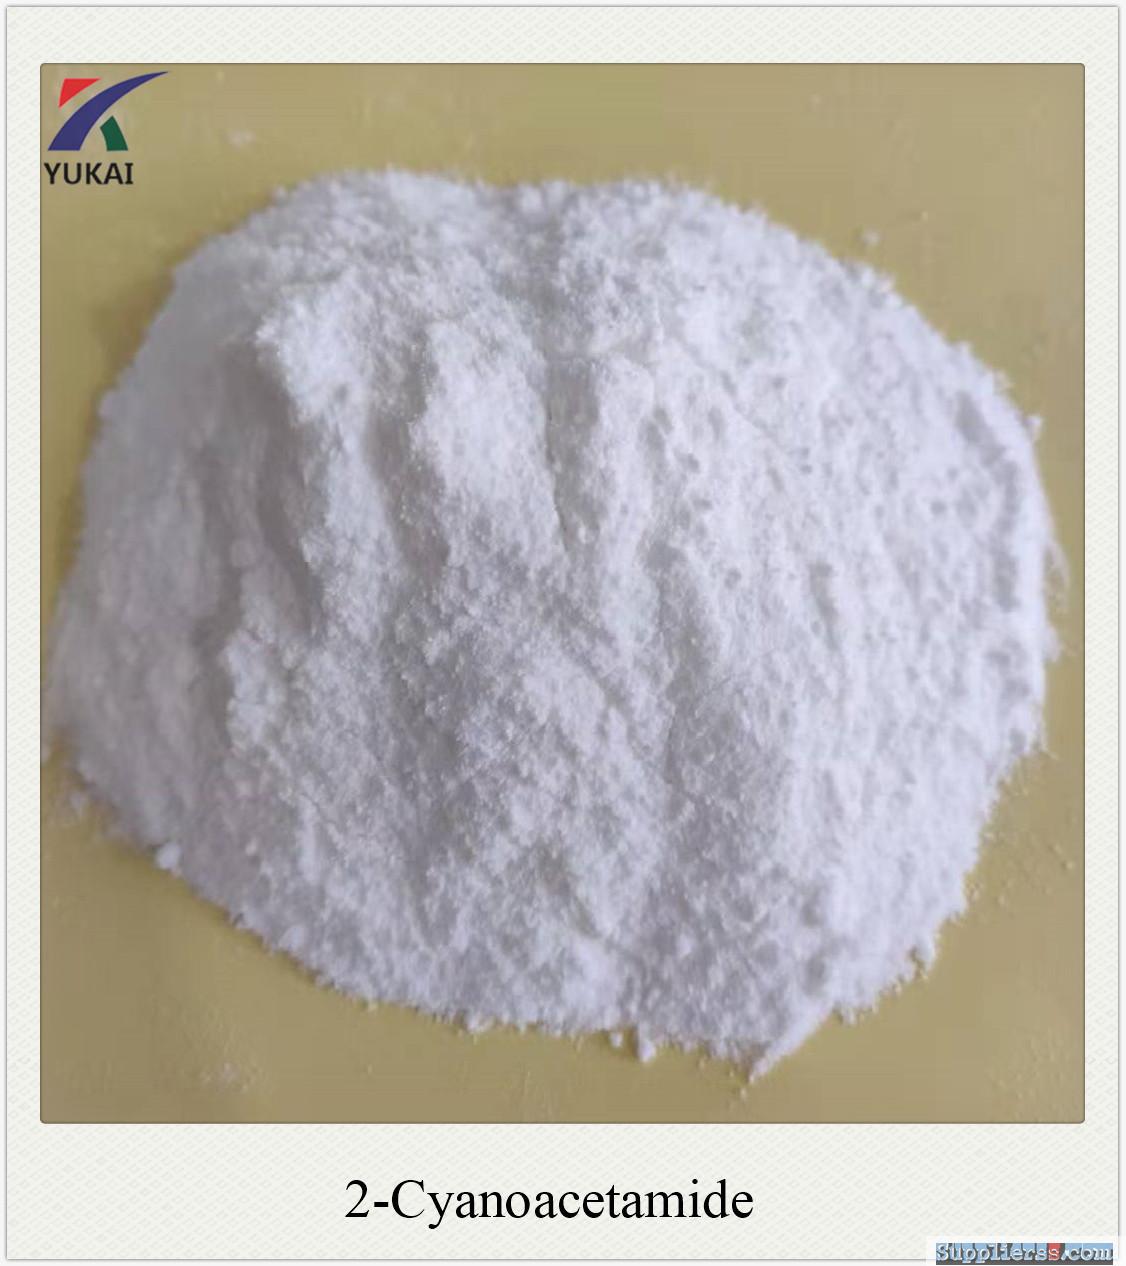 2-Cyanoacetamide 99% Crystalline Powder CAS:107-91-5